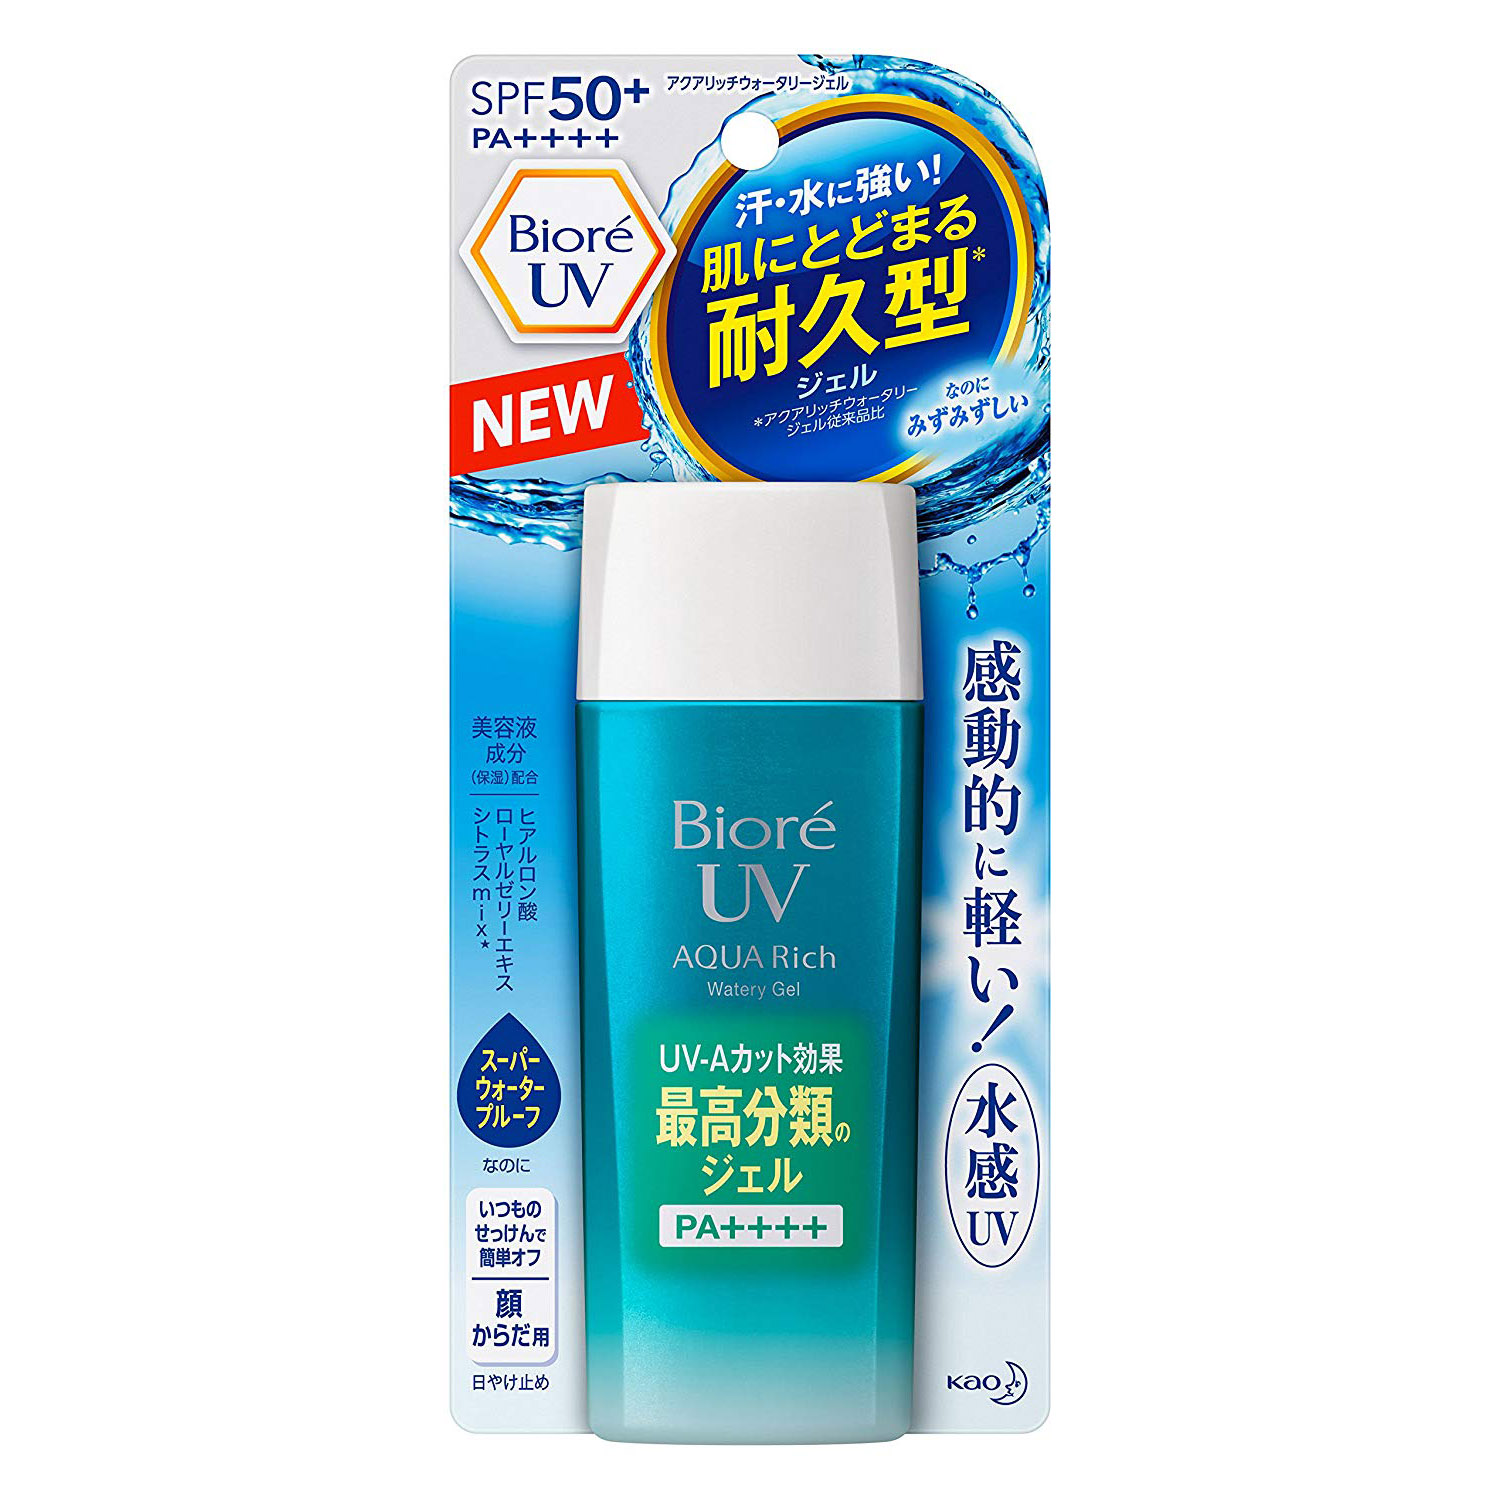 Biore uv aqua rich spf. Biore UV SPF 50. Крем СПФ 50 Biore. Солнцезащитный крем Biore UV 50. Biore UV Aqua Rich watery.